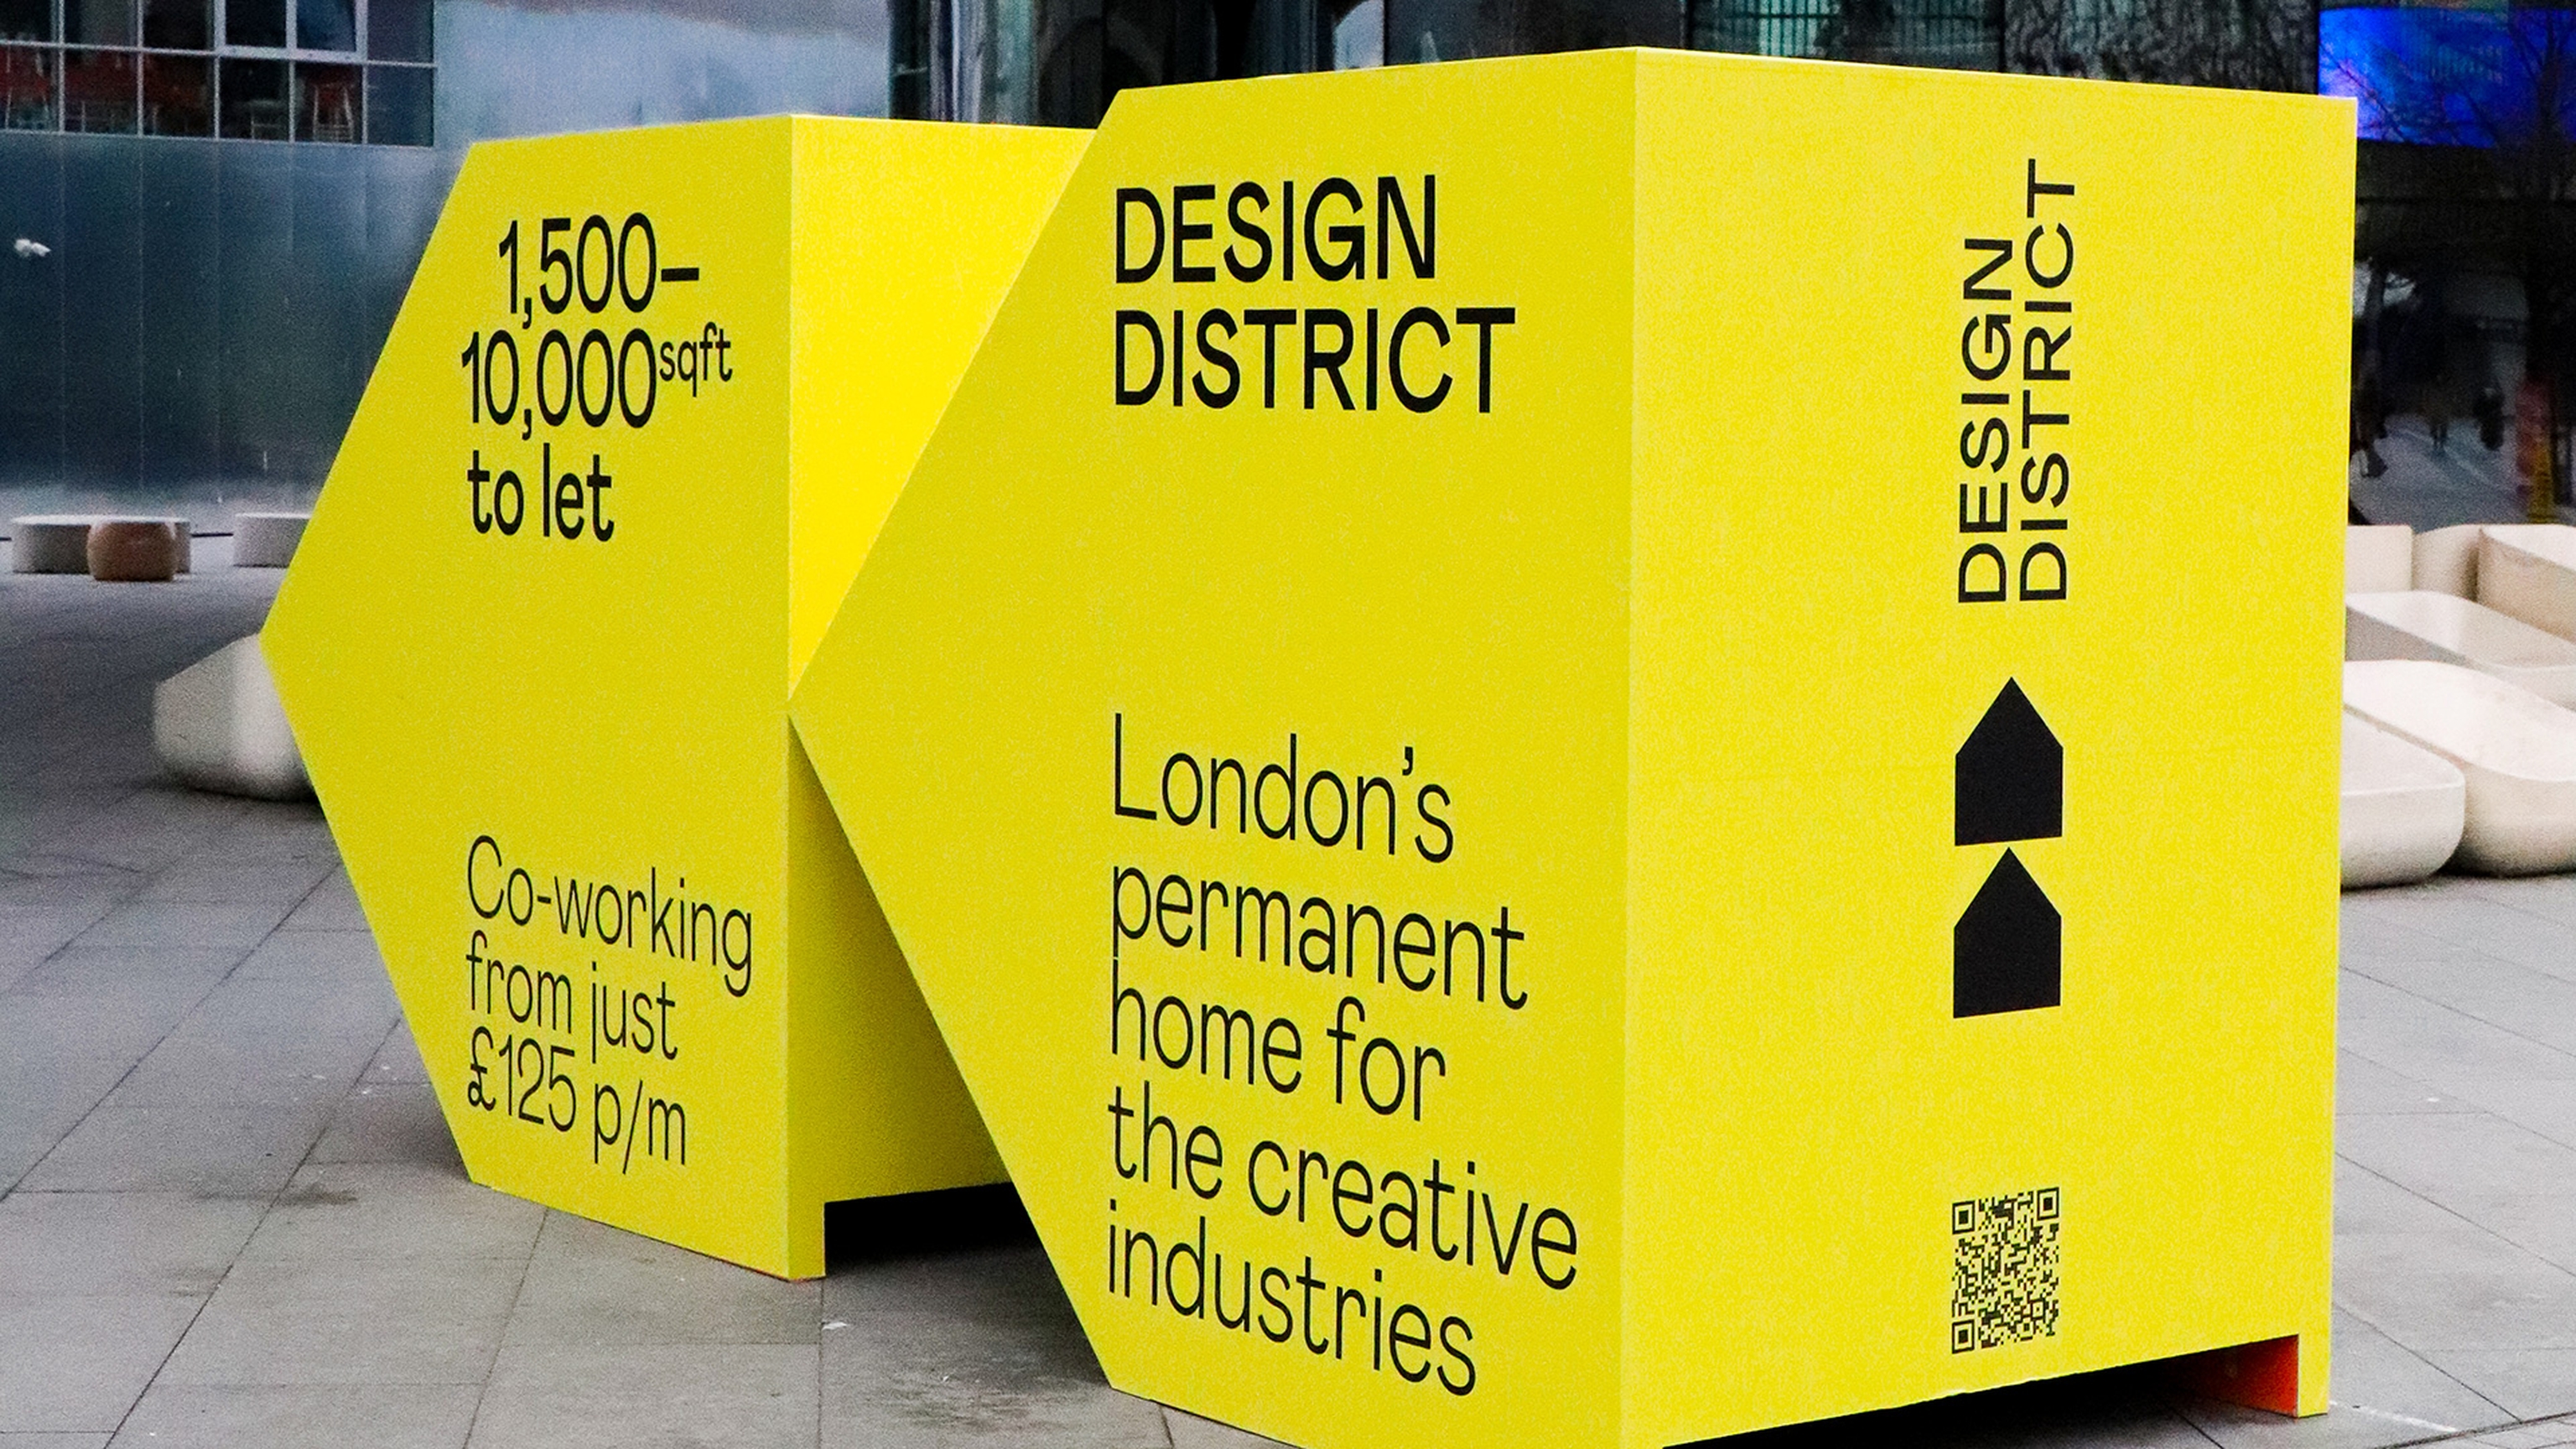 Design district signage in North Greenwich